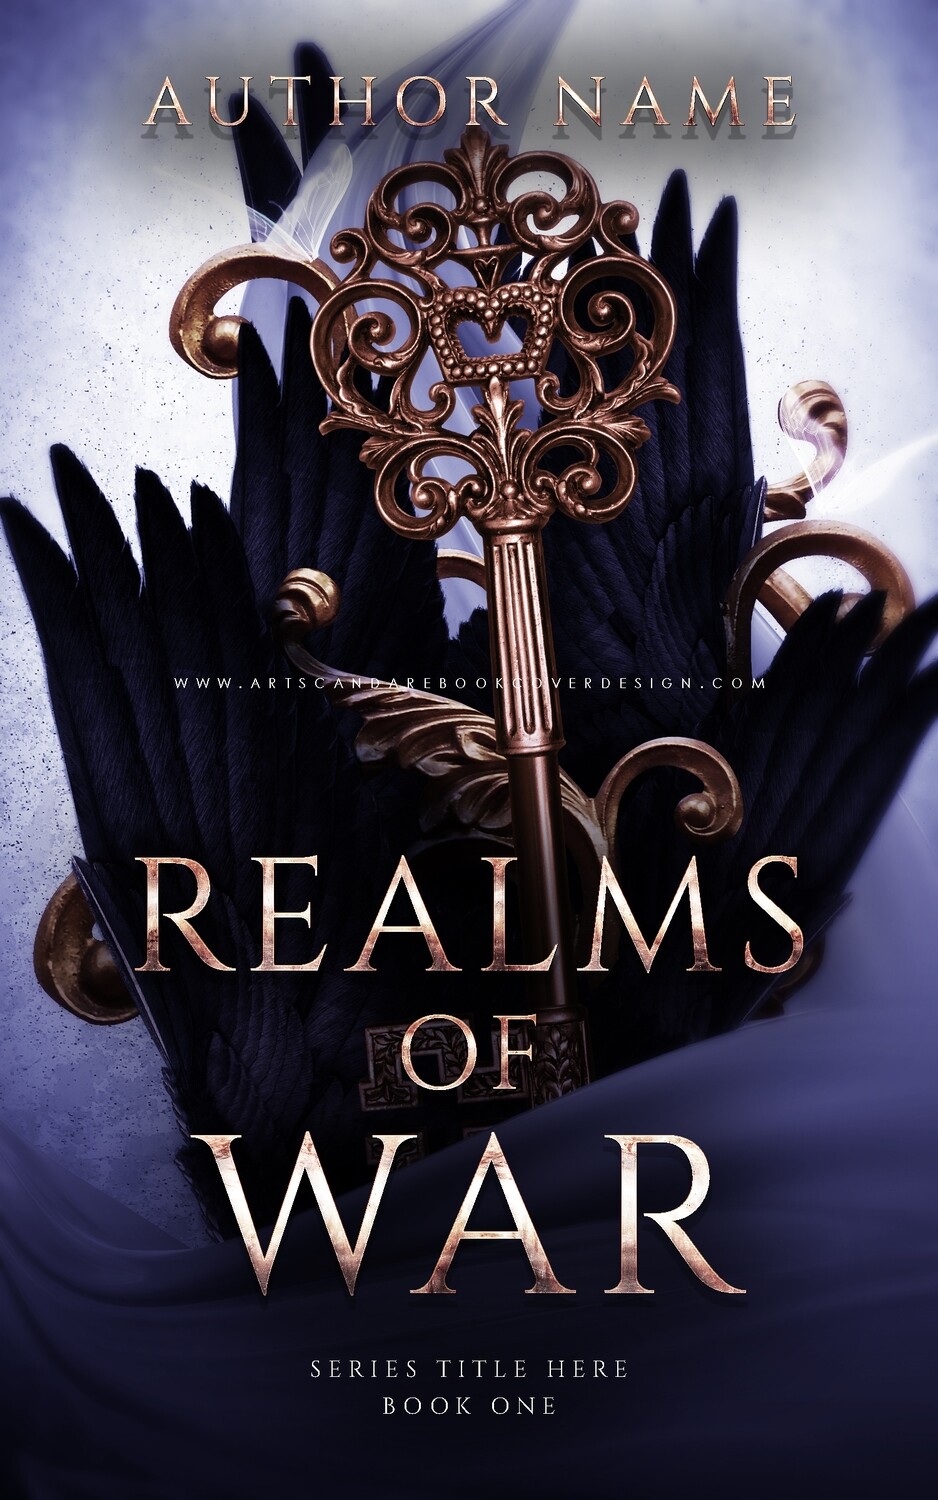 Ebook: Realms of War TRILOGY